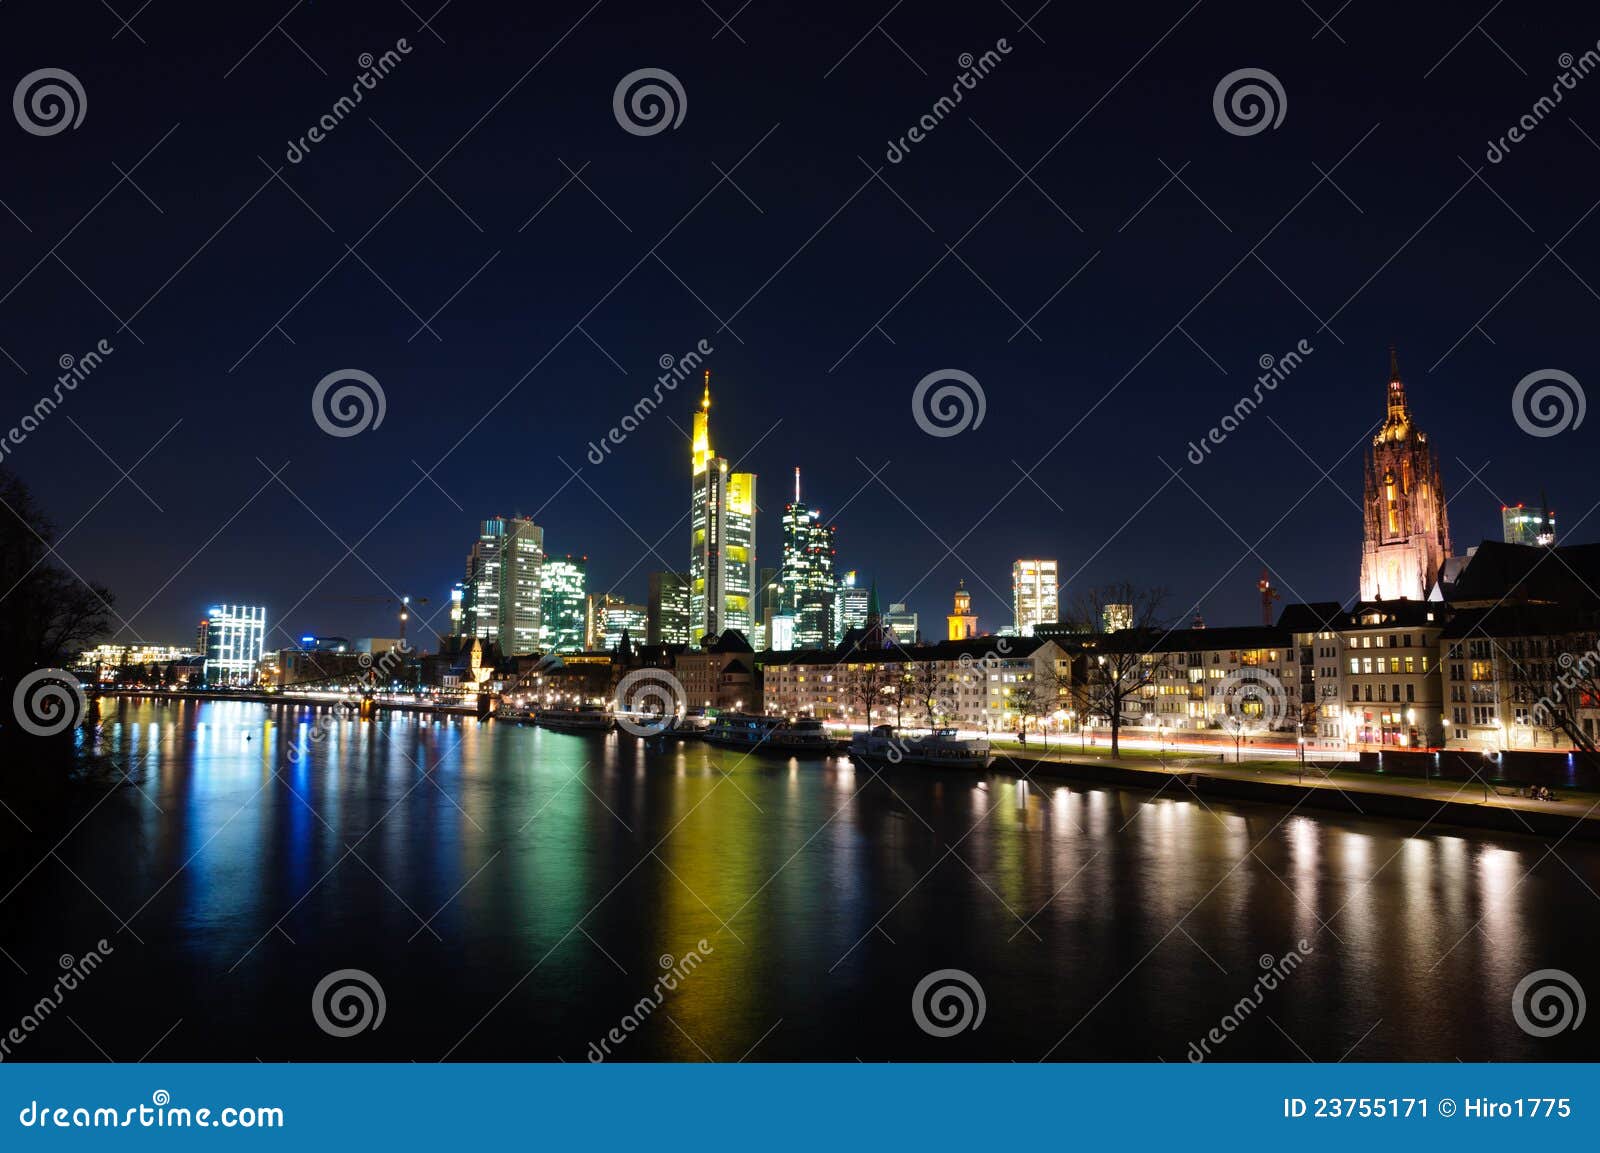 frankfurt am main, germany at night